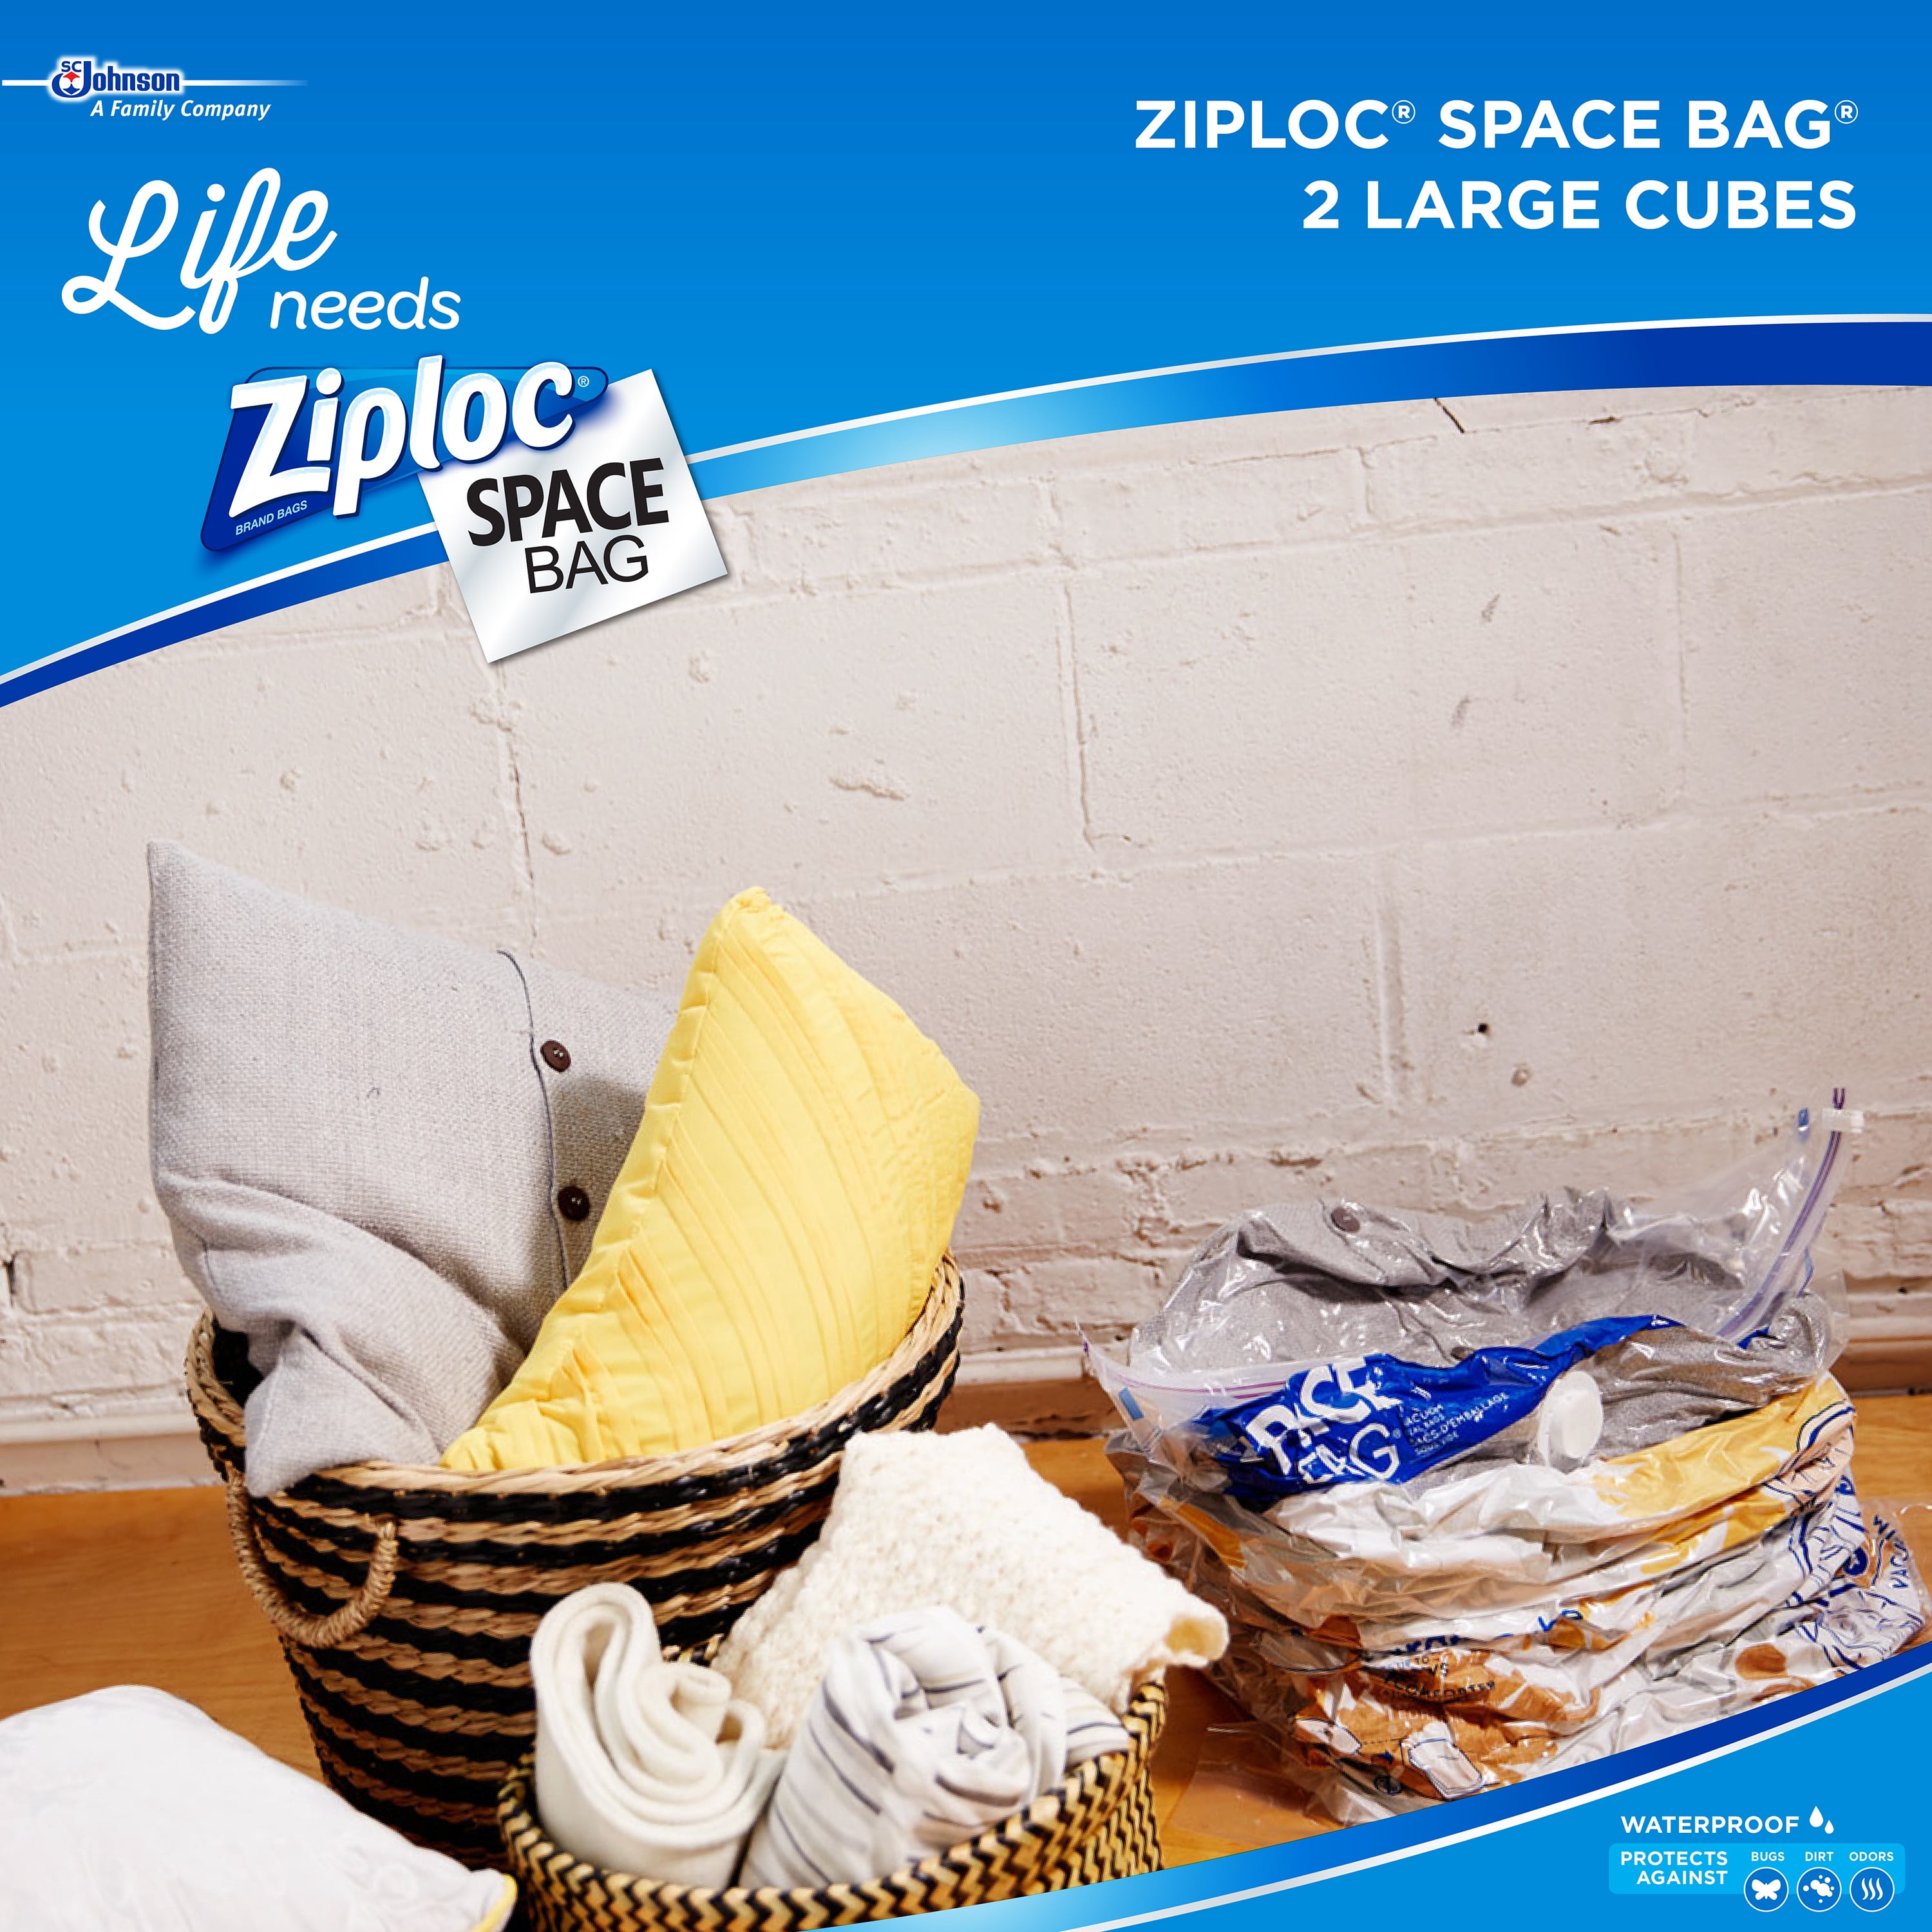 Ziploc Large, XLarge Plastic Cube Combo Space Bag 4 - 2/pack 86112